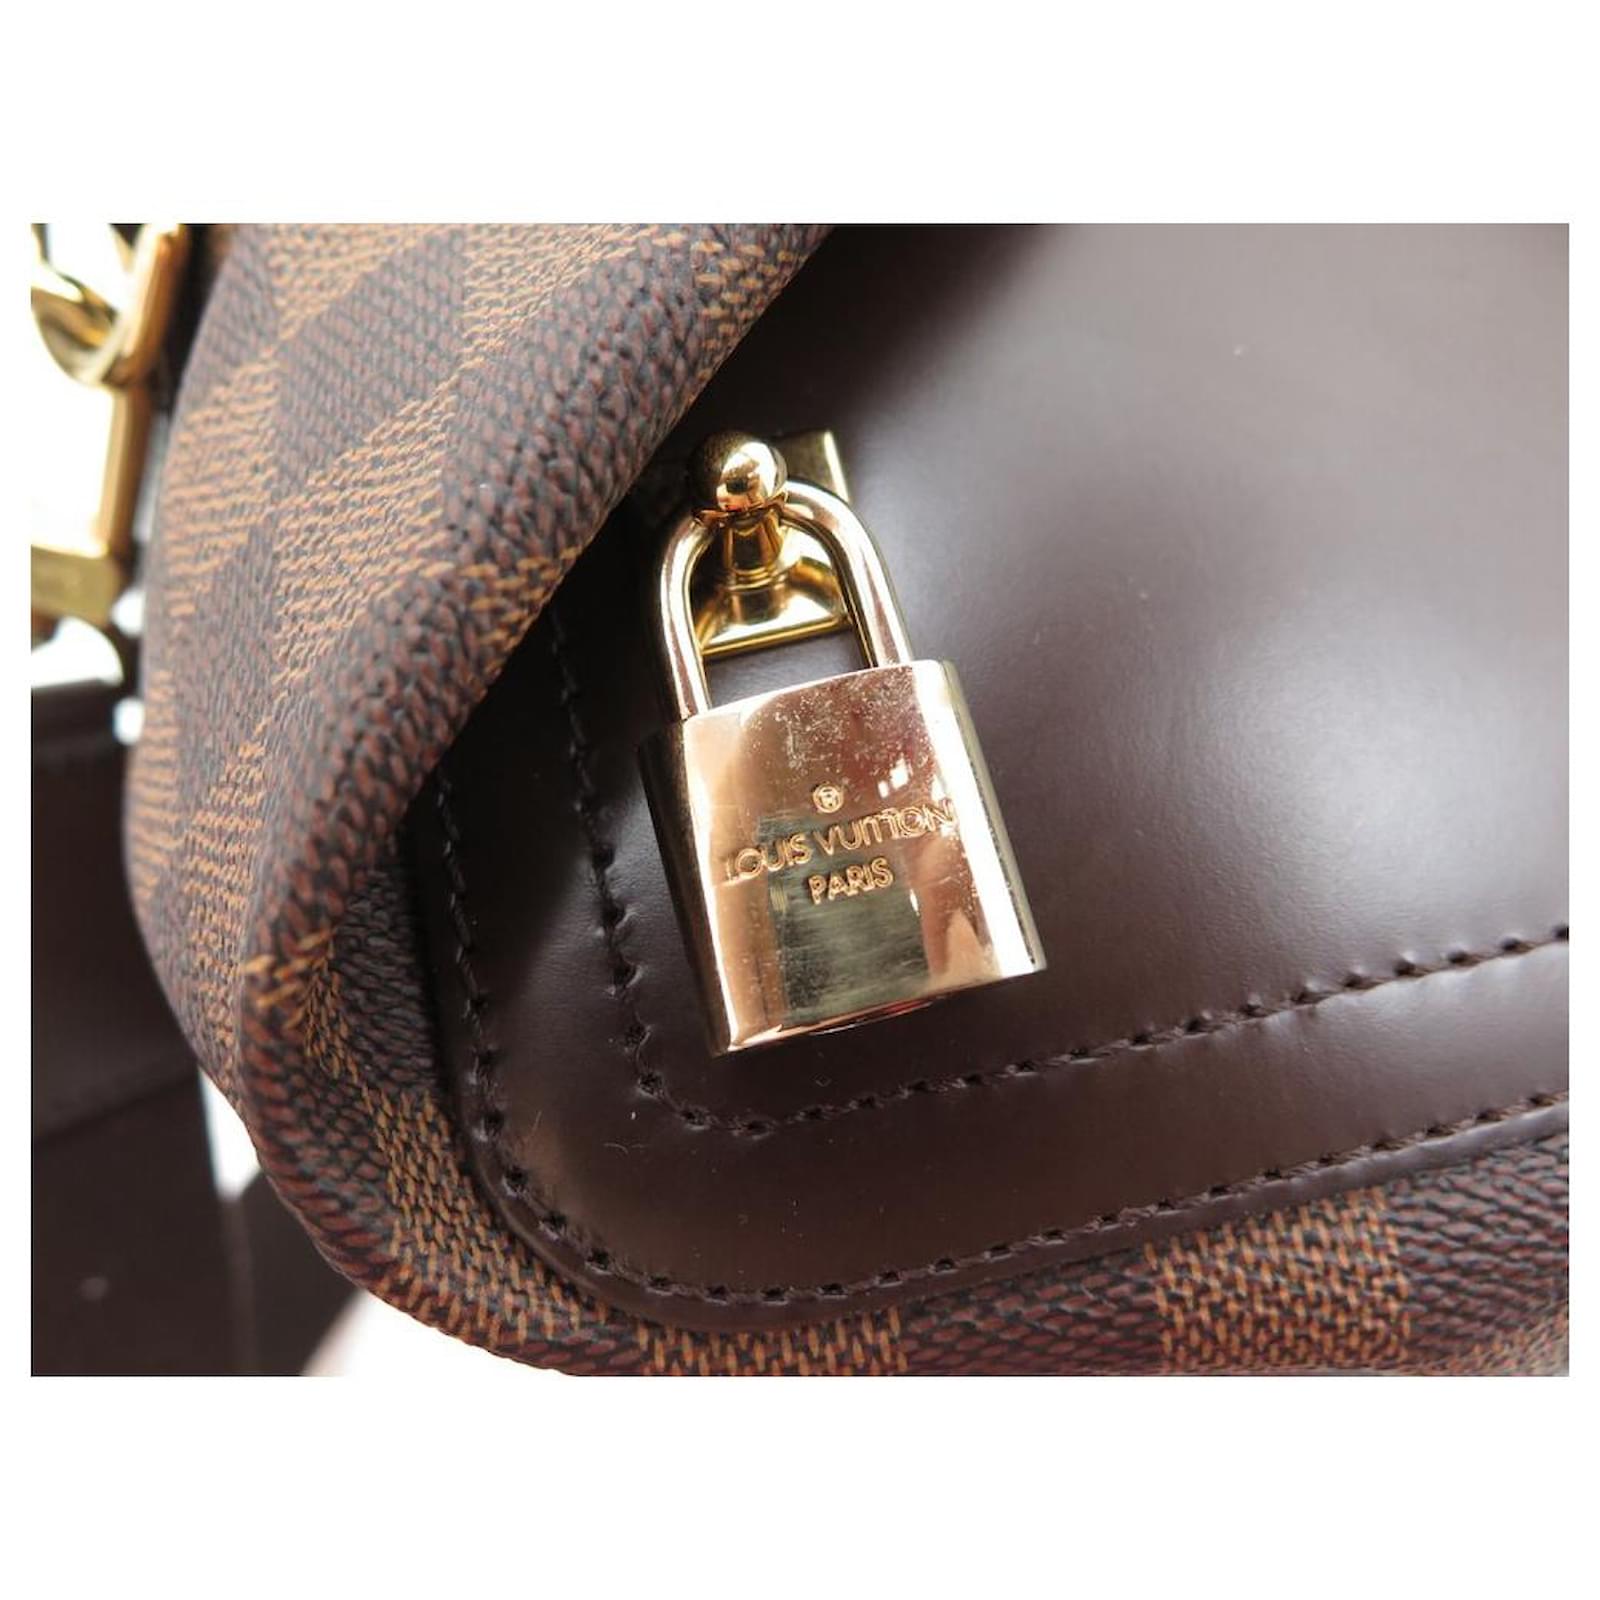 Neo greenwich cloth travel bag Louis Vuitton Navy in Cloth - 32489616